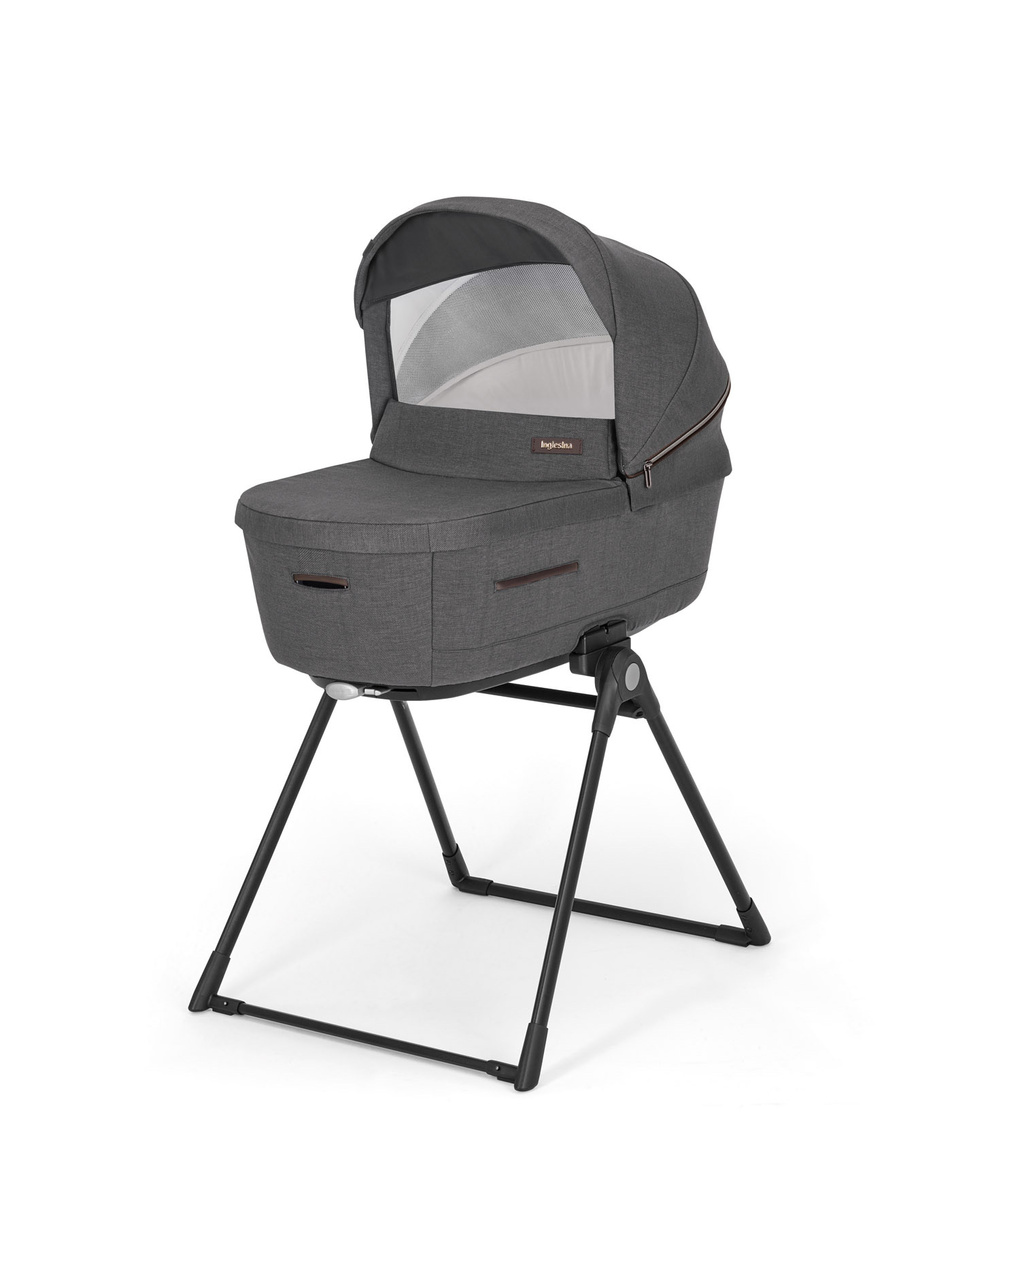 Aptica system quattro darwin infant recline colore velvet grey telaio palladio black – inglesina - Inglesina